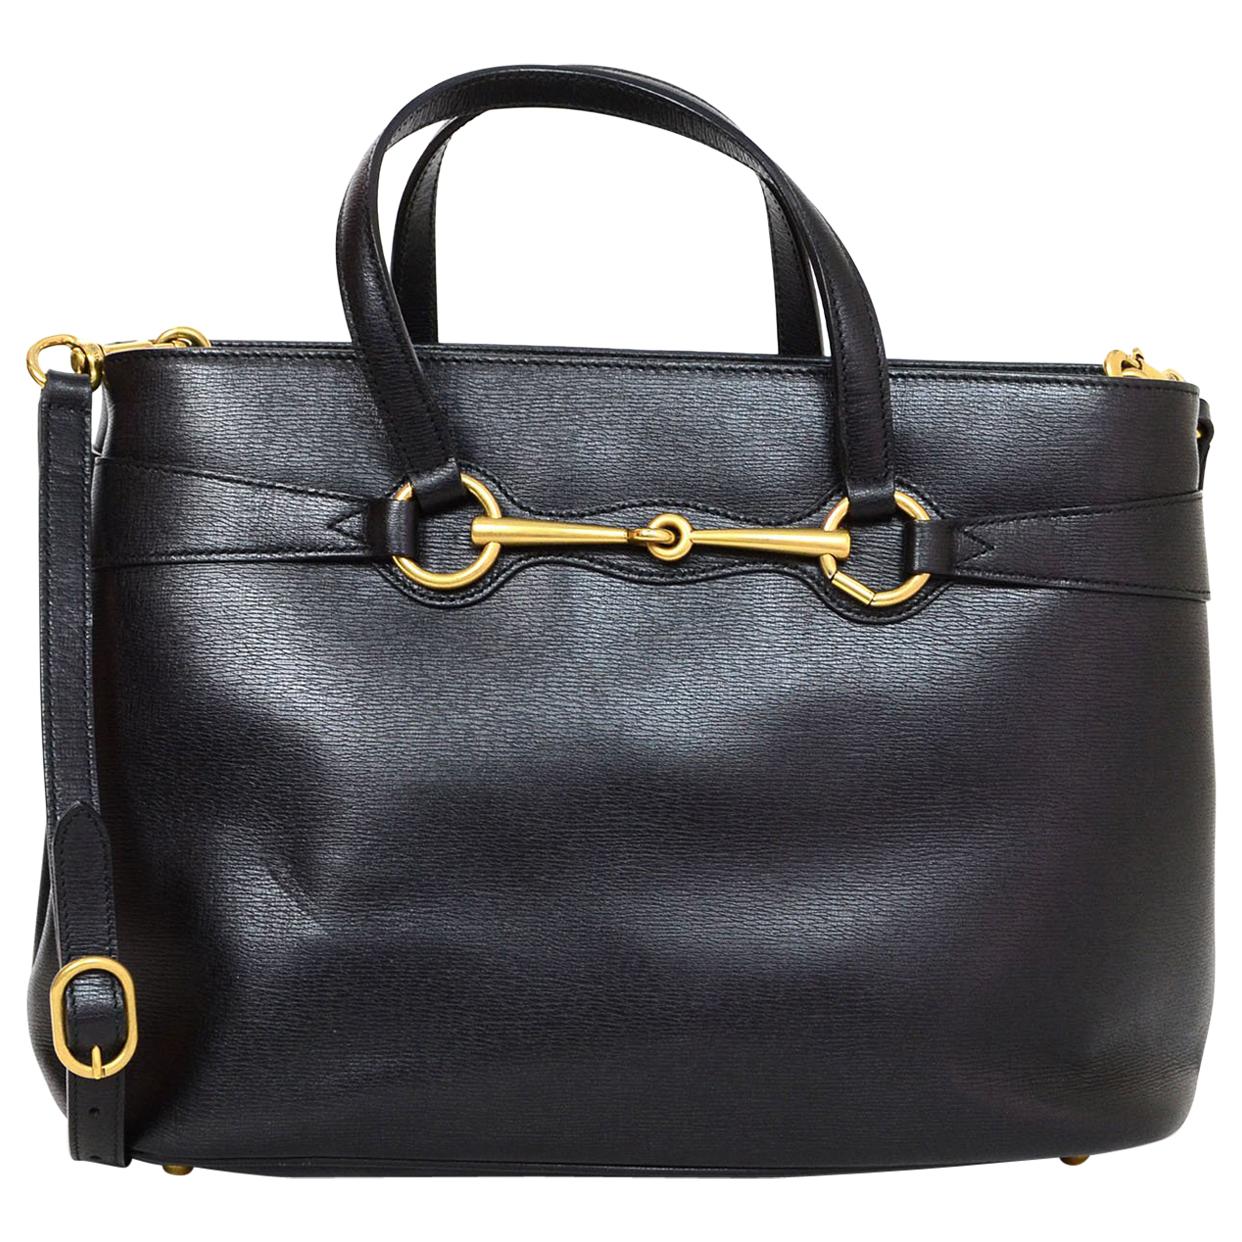 Gucci Black Medium Bright Bit Leather Satchel Bag with Dust Bag 